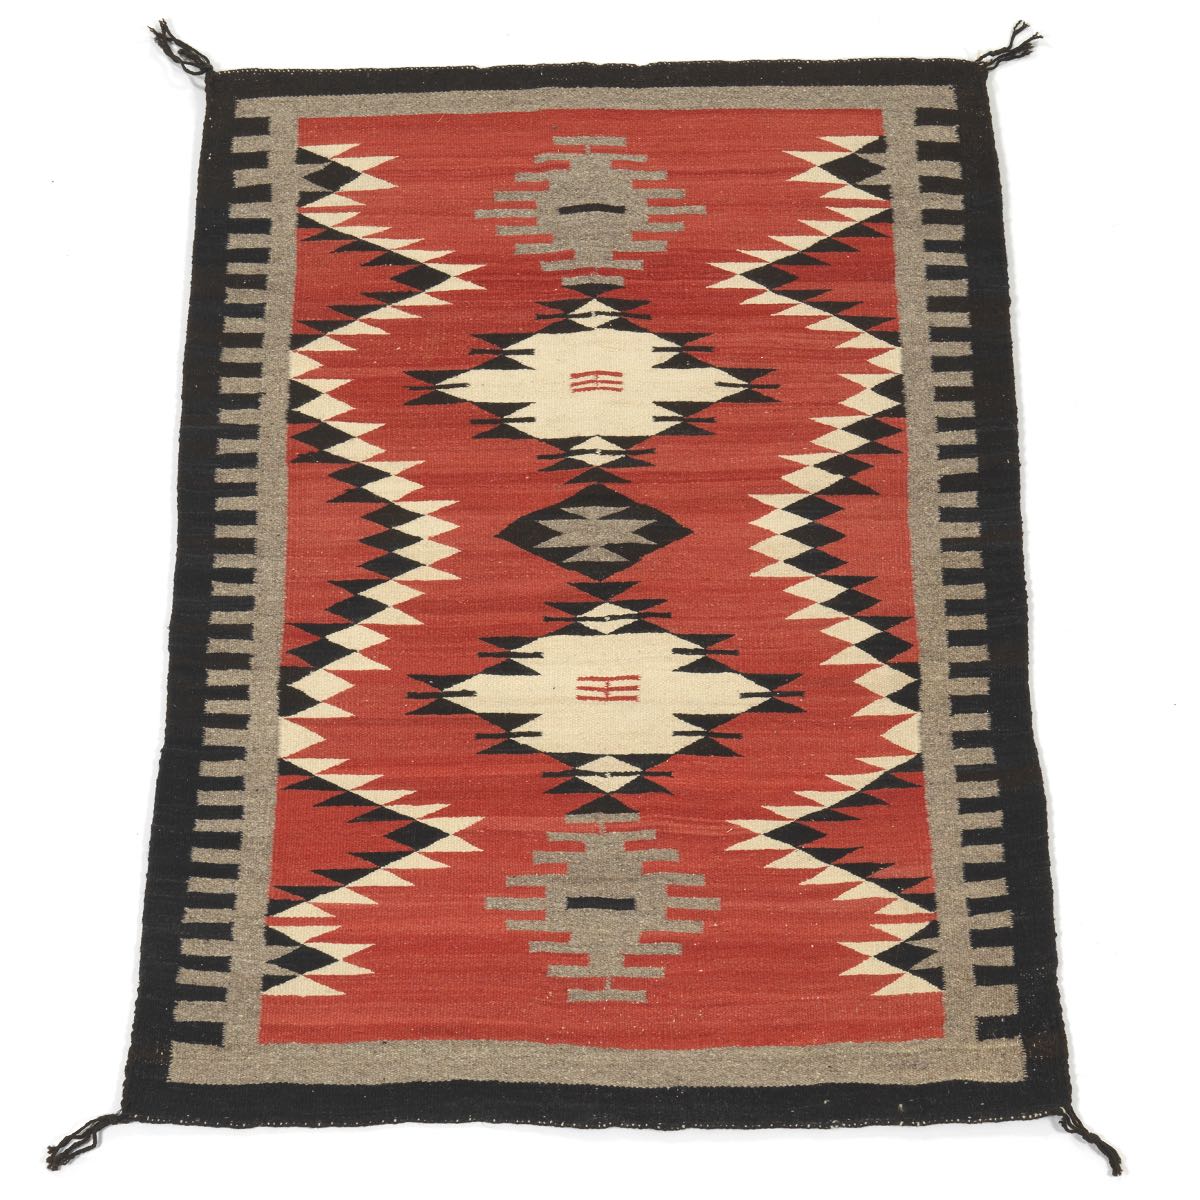 Navajo Saddle Blanket, ca. 1900-1940's 48-5/8" x 33-3/4"Homespun yarn of natural dyes including red,